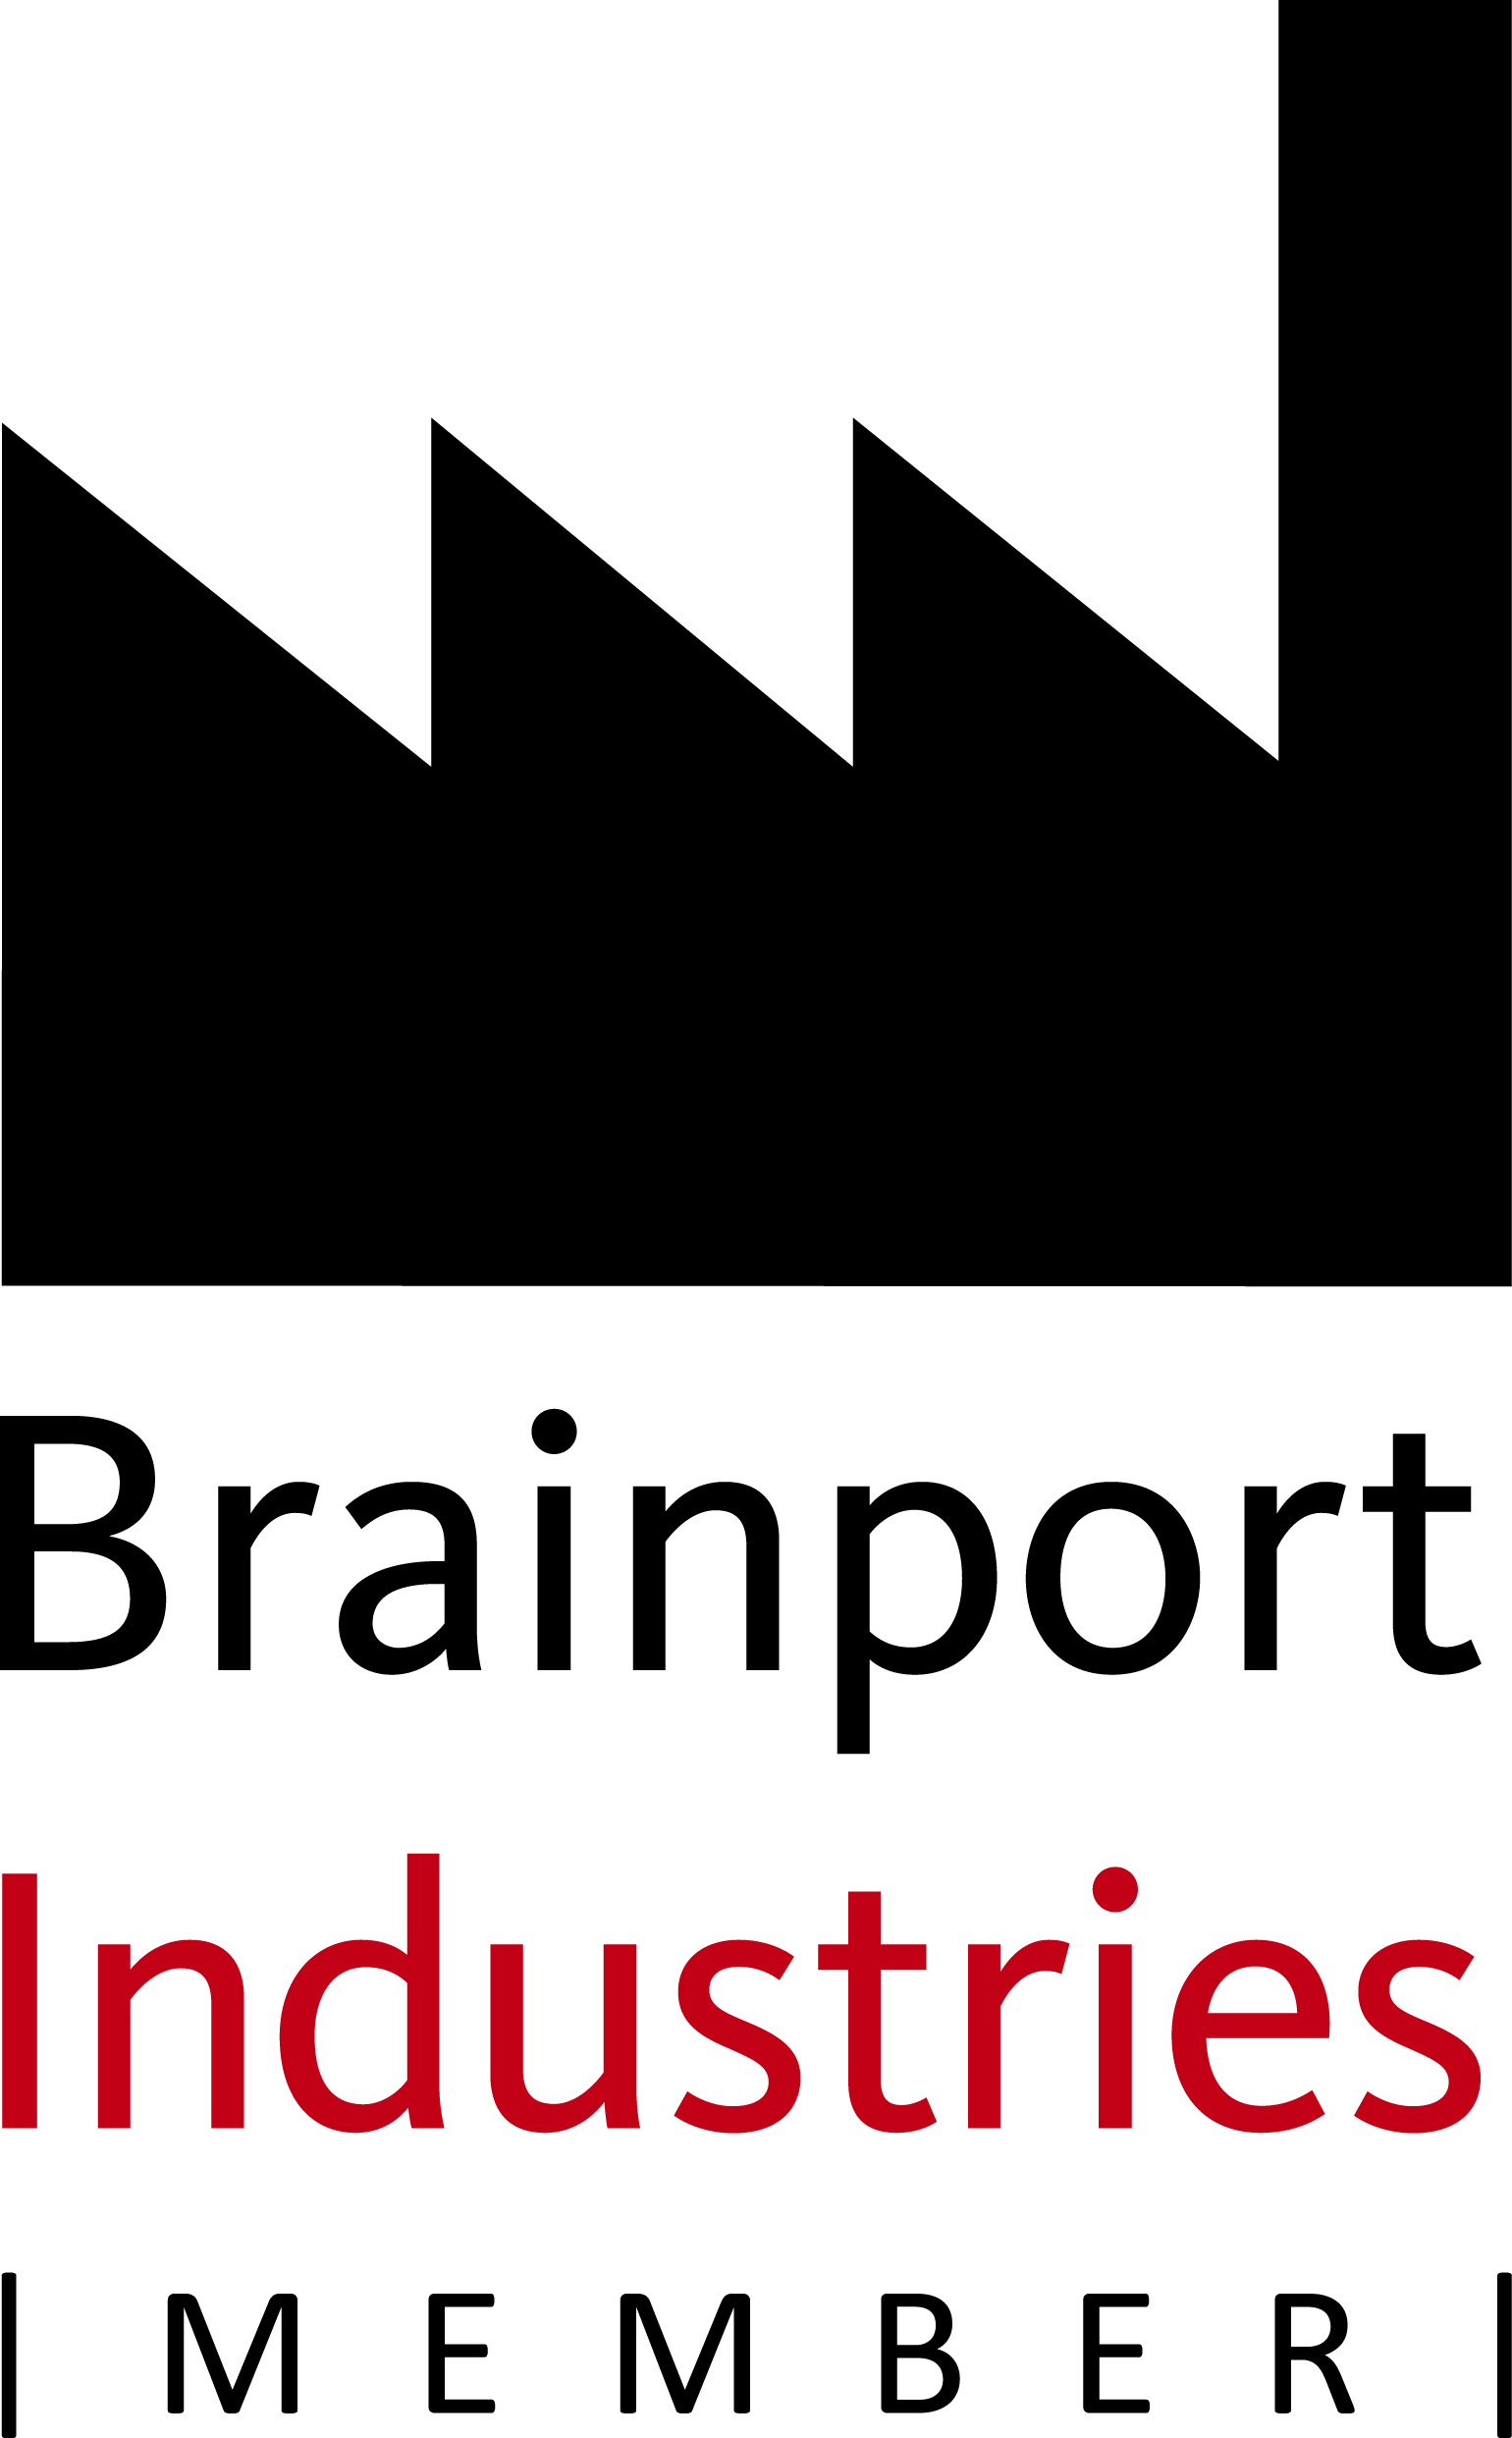 Brainport Industries Member